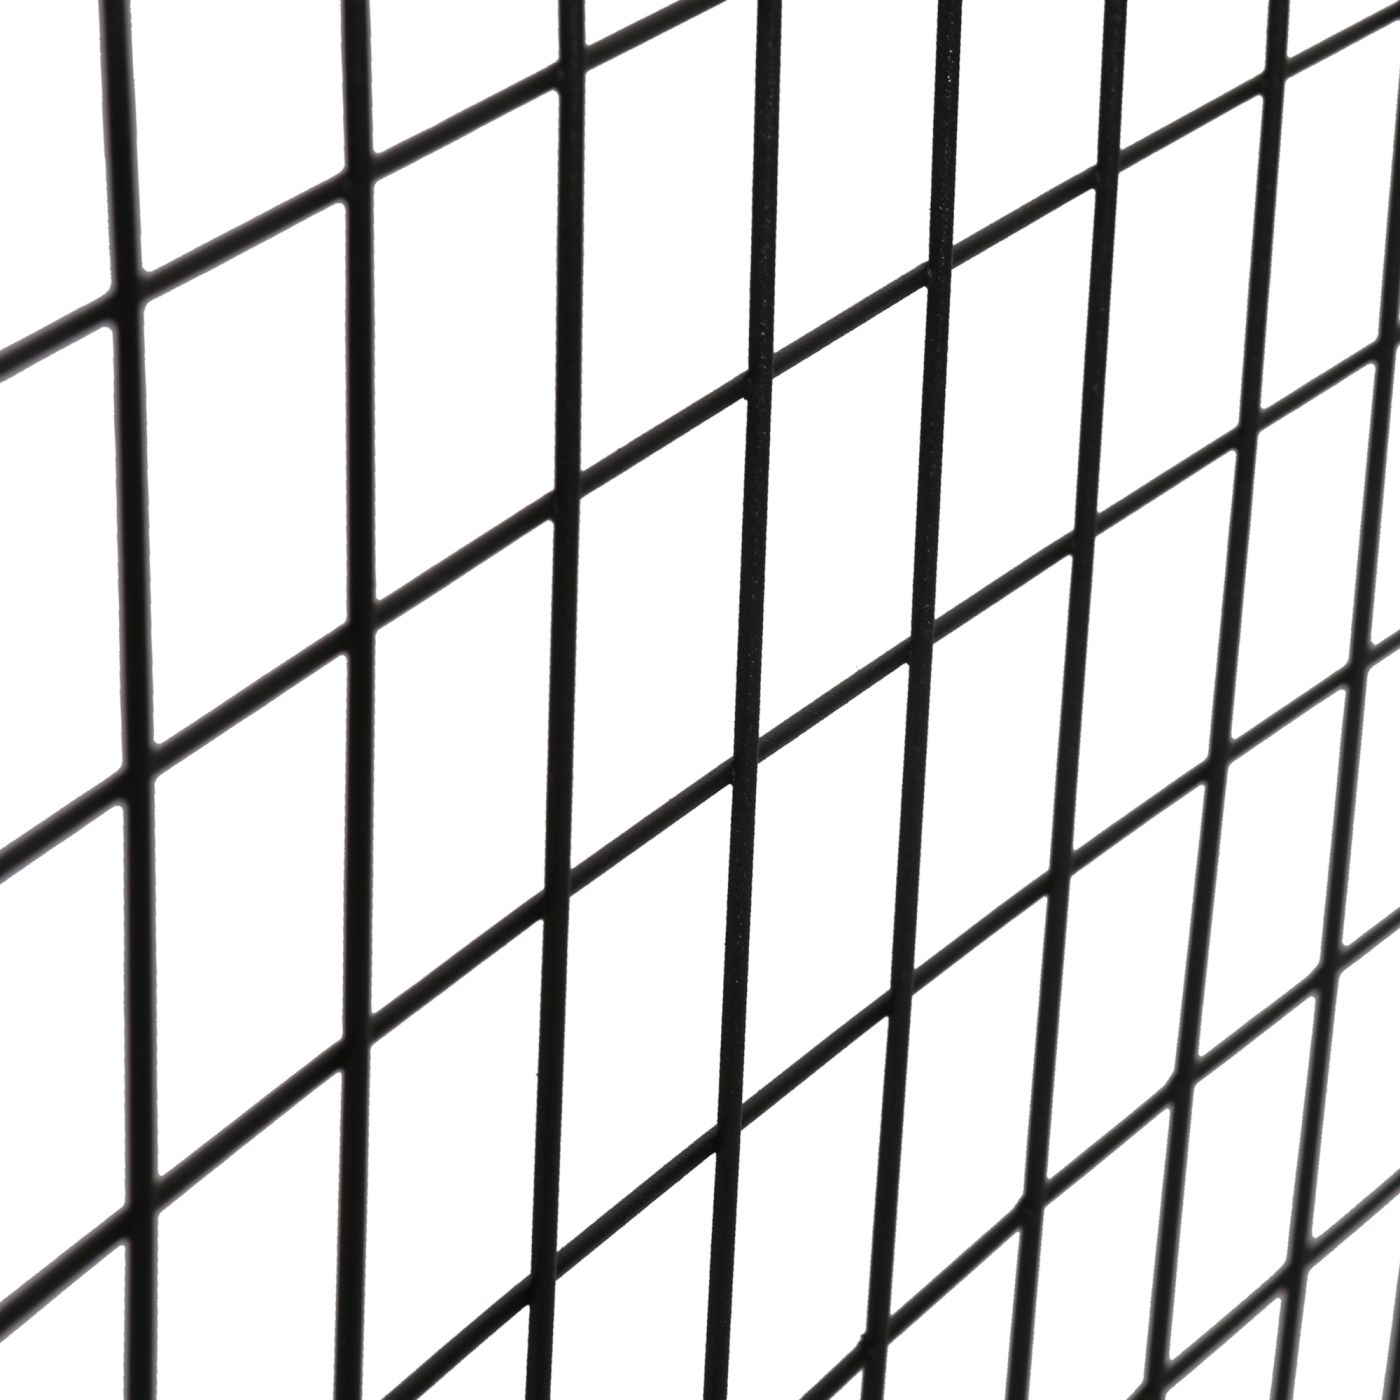 Fotogitter Metall schwarz 58x36 cm - Polen, A-Ware - Großhandelsplattform